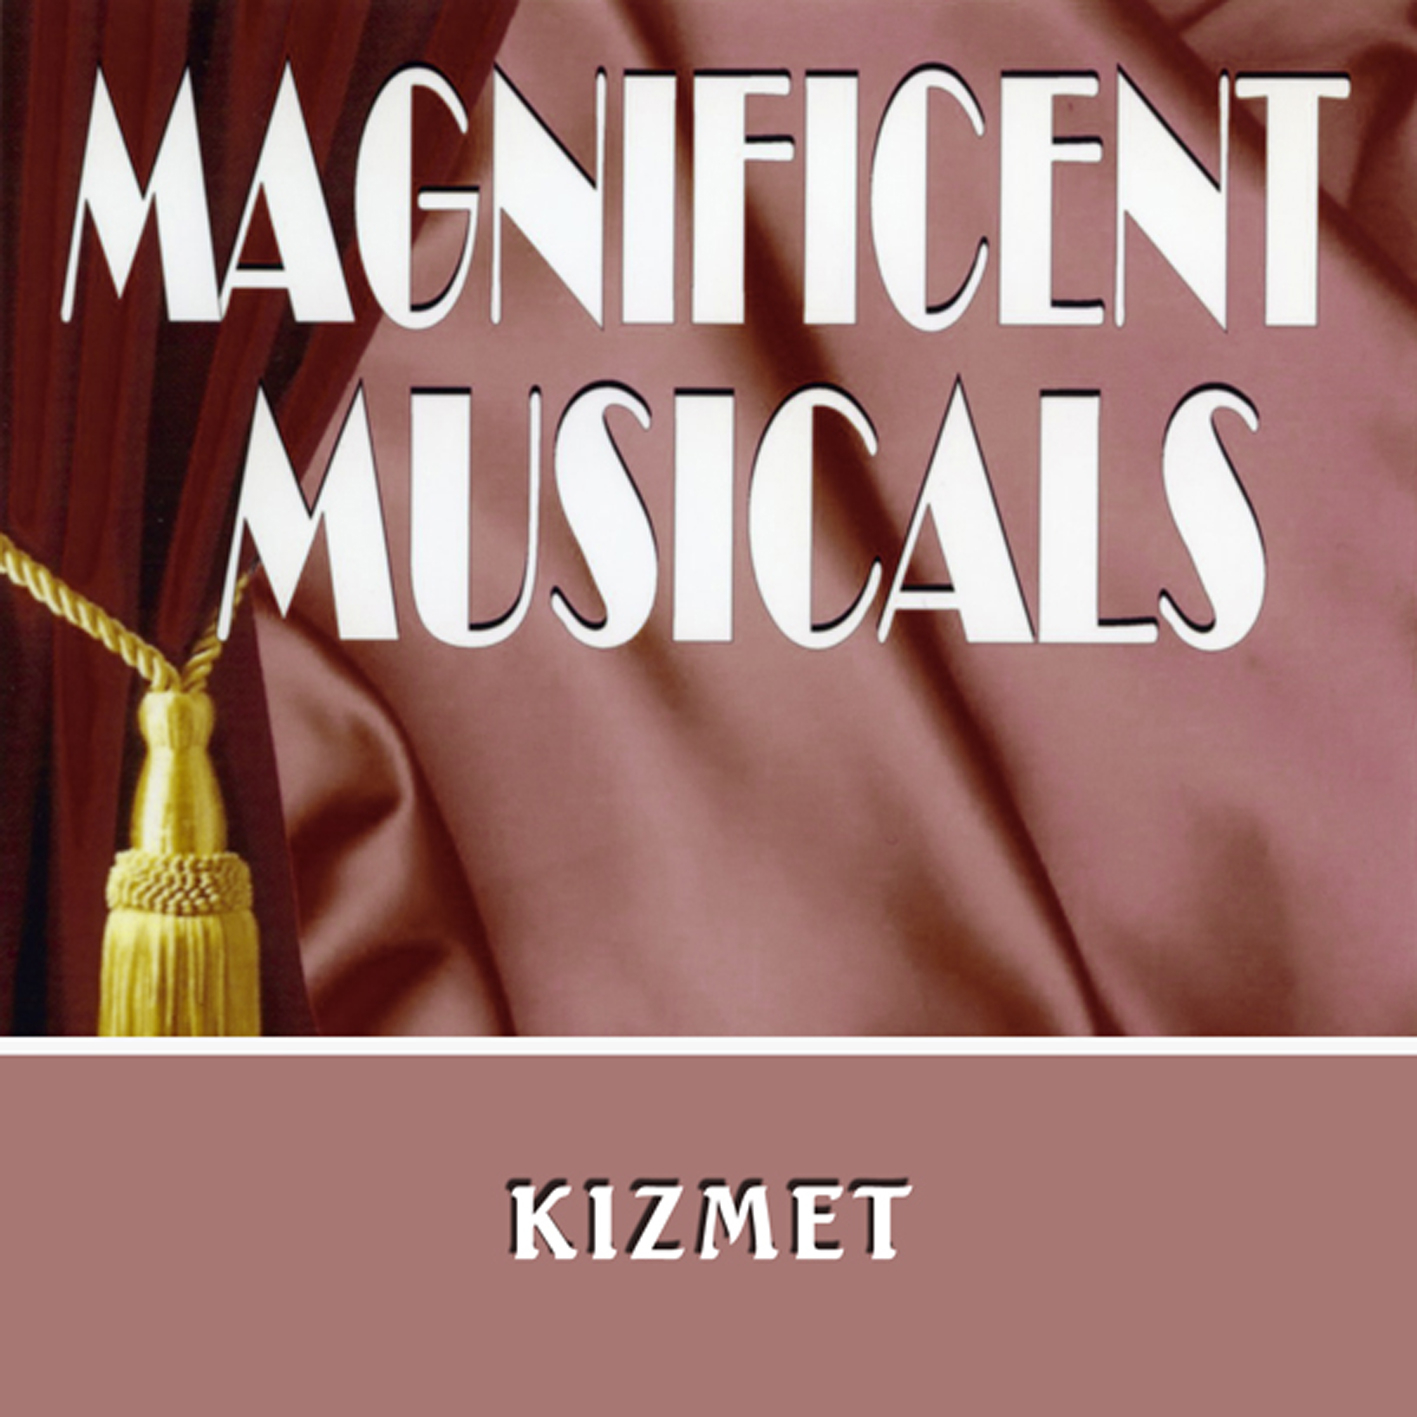 The Magnificent Musicals: Kismet